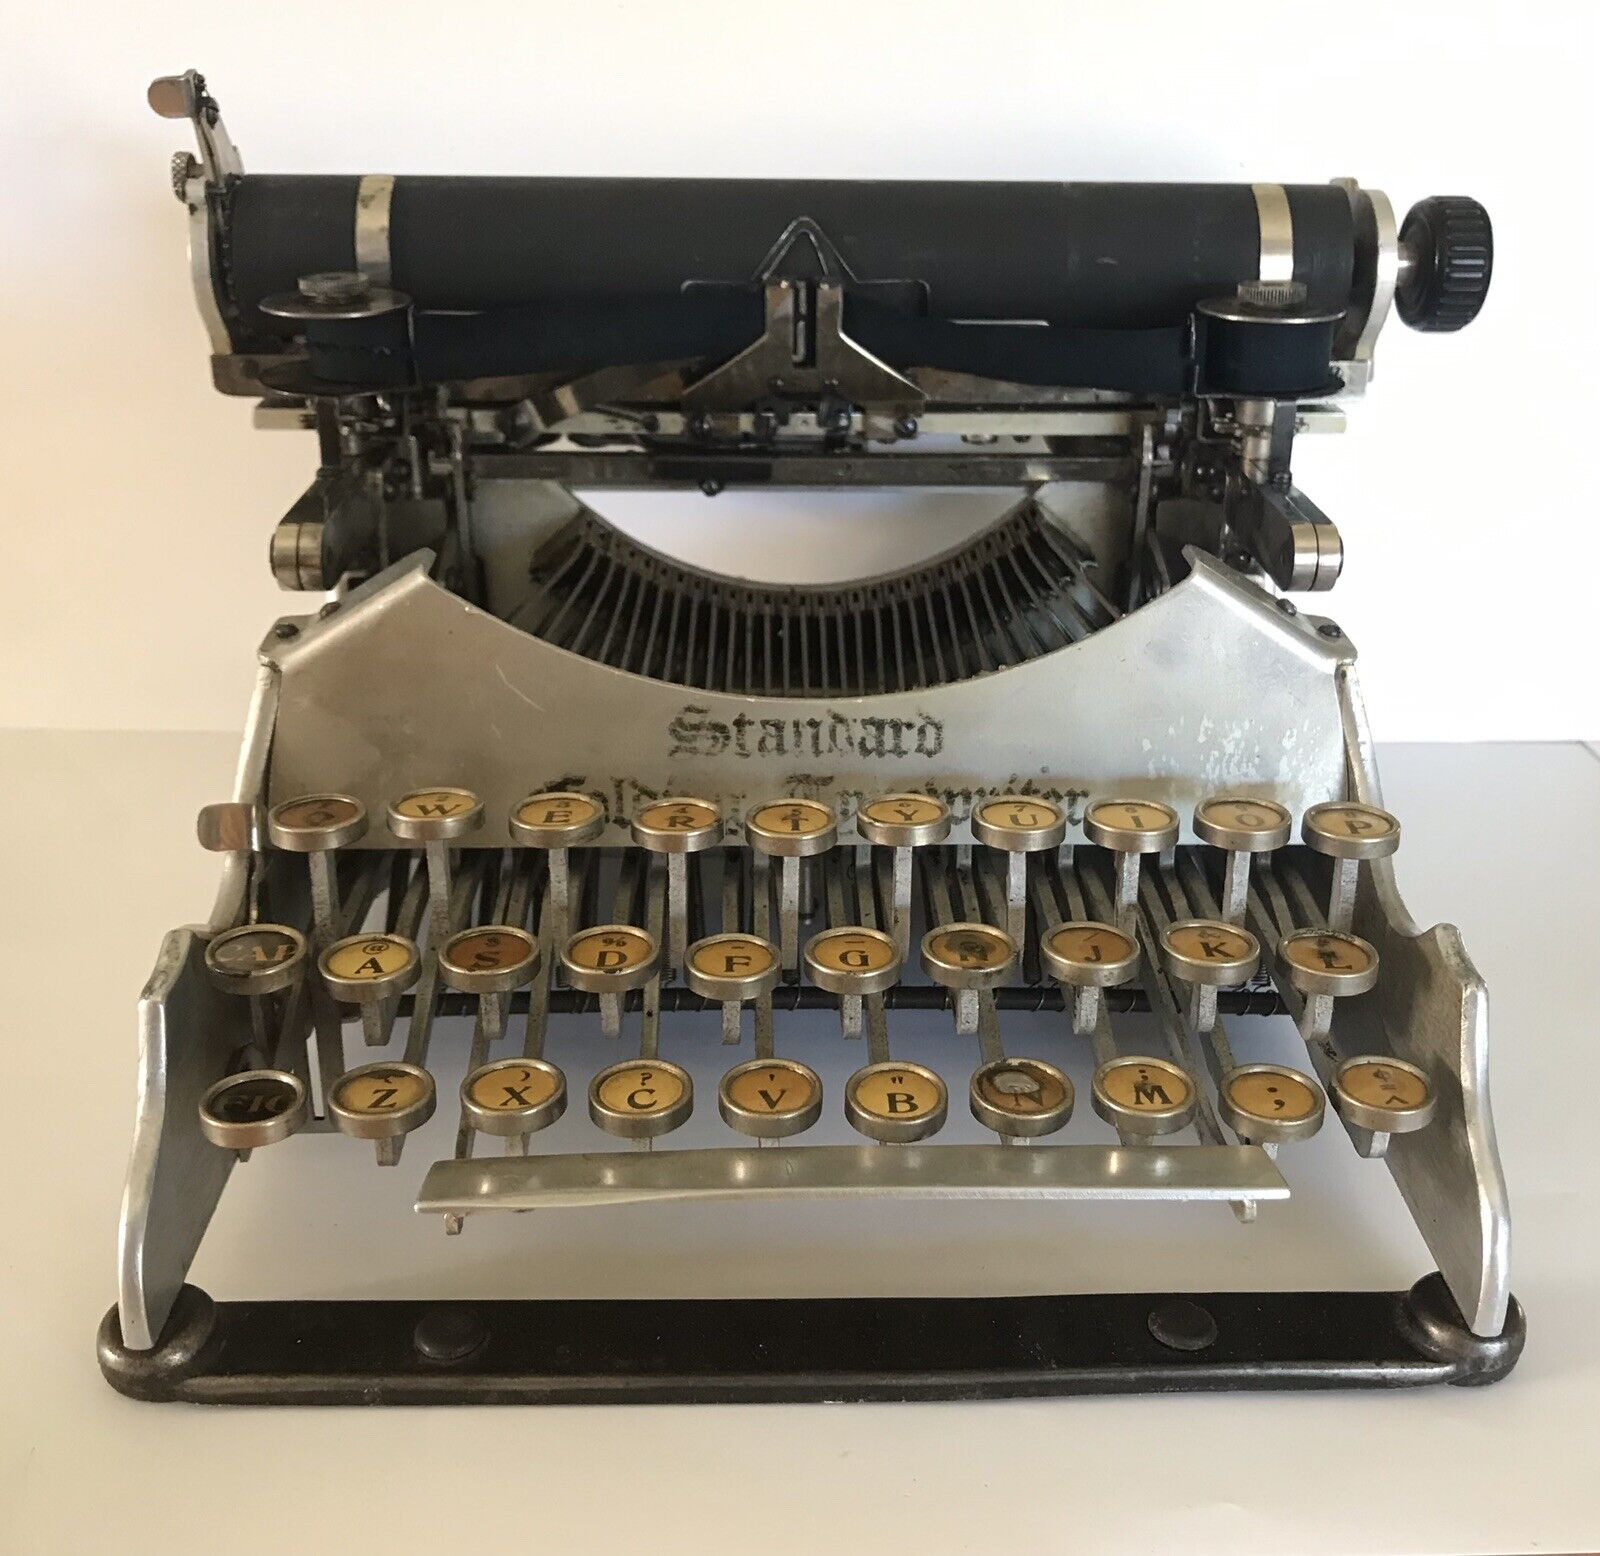 Standard Folding Typewriter Model 2  serial number 10090 working condition